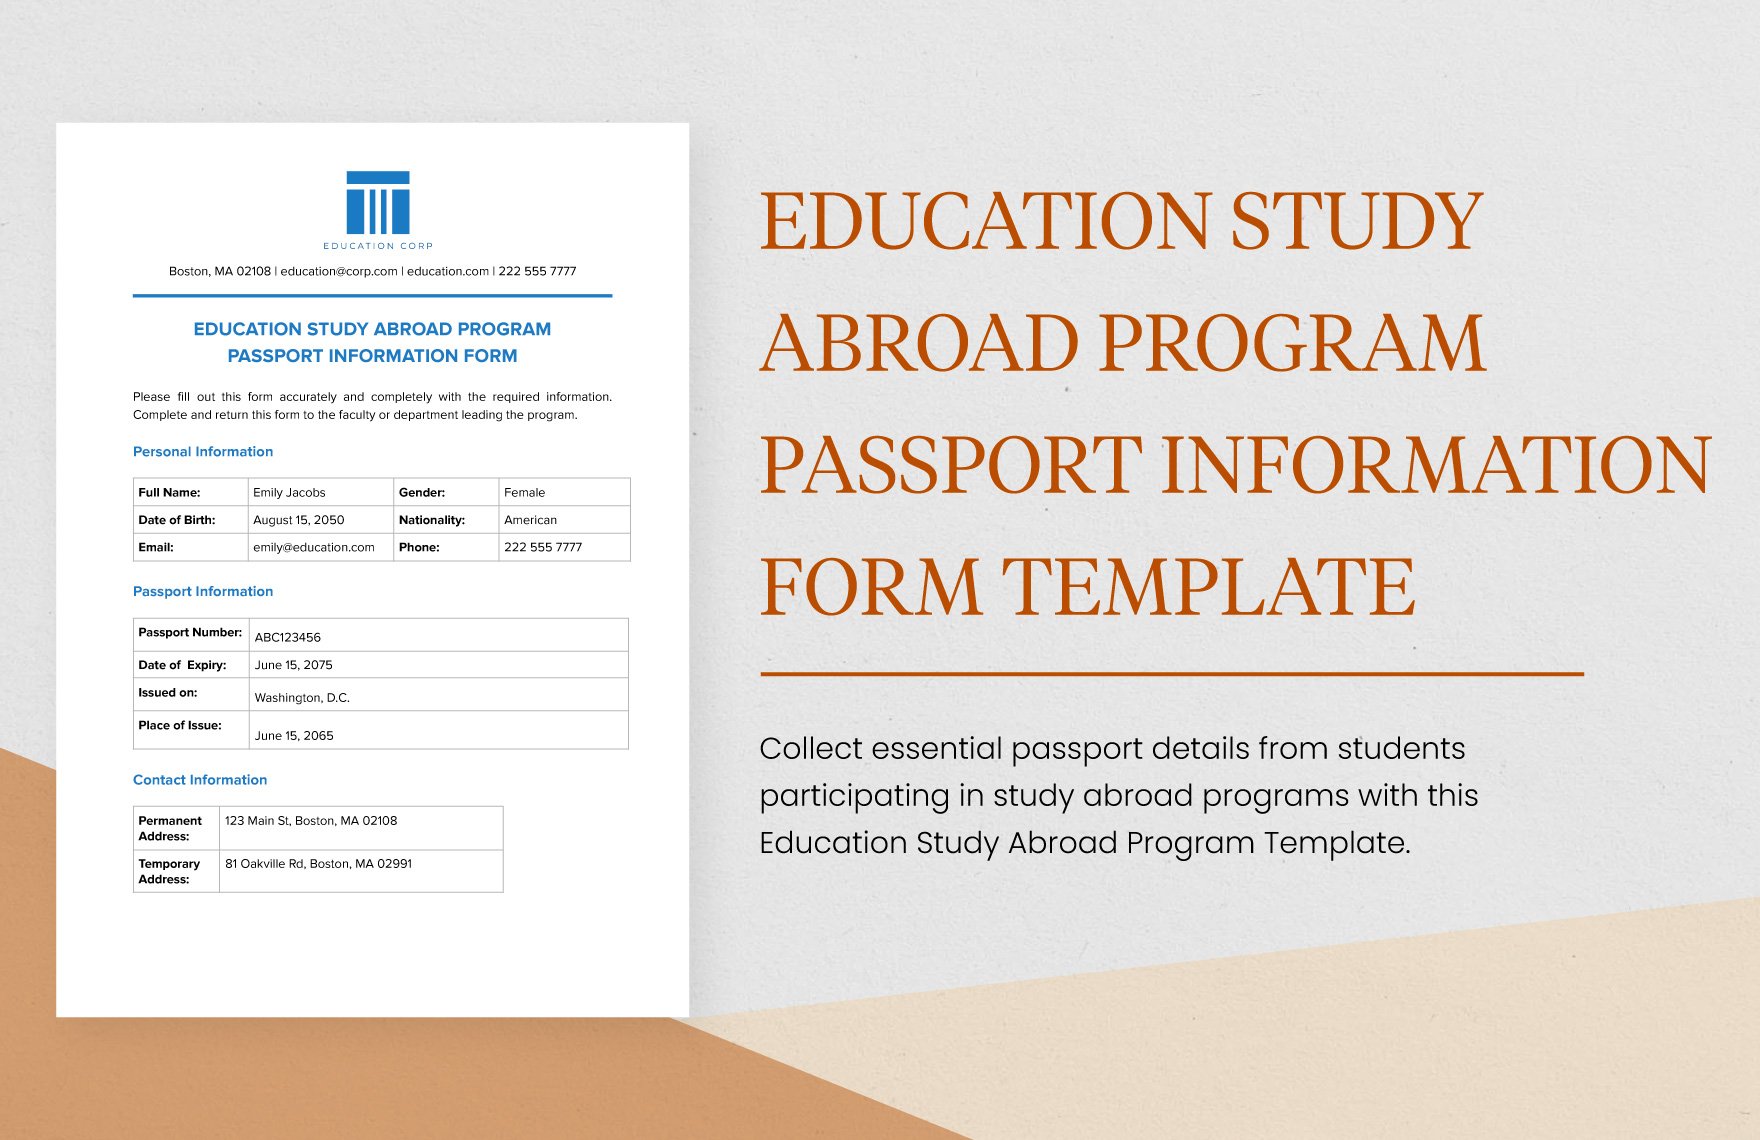 Education Study Abroad Program Passport Information Form Template